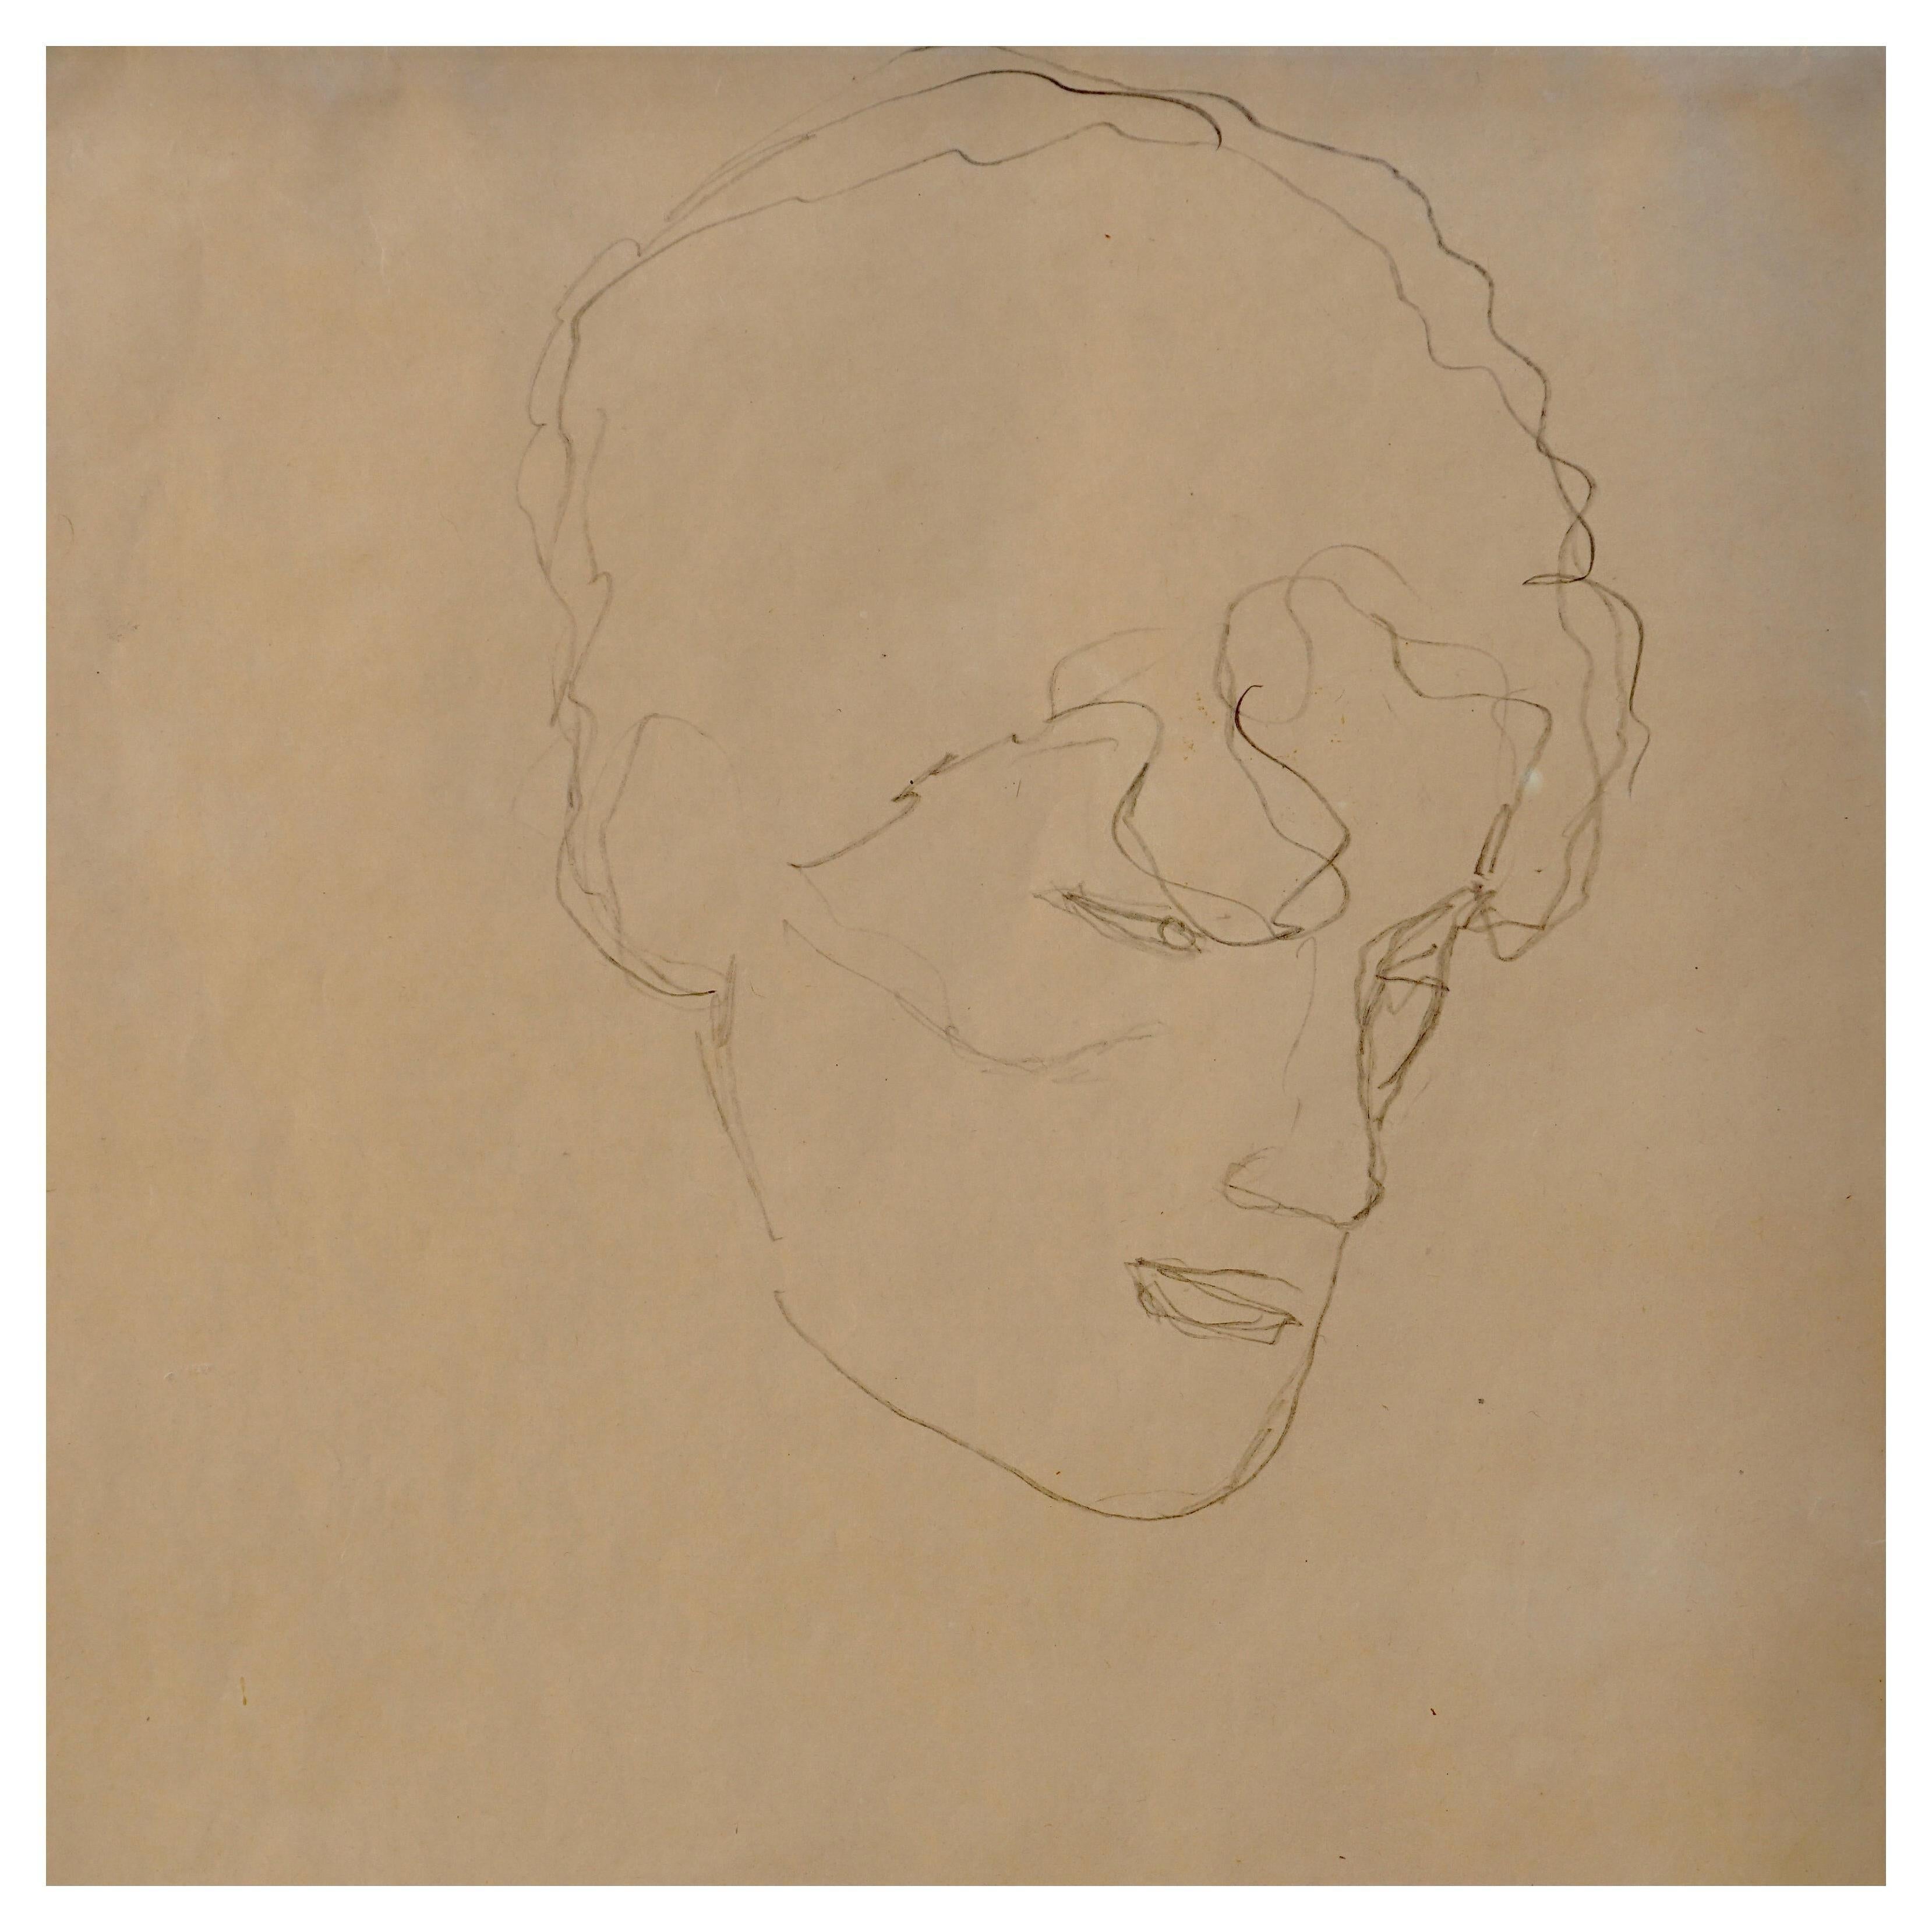 Gustav Klimt (Austrian, 1862-1918)
Frauenkopf nach rechts, 1916
Pencil on paper
Dimensions: 22.5 x 14.75 Inches (57.2 x 37.5 cm) (sheet)
Stamped lower right: GUSTAV / KLIMT / NACHLASS
A rare opportunity to own a Gustav Klimt 

Provenance:
Estate of